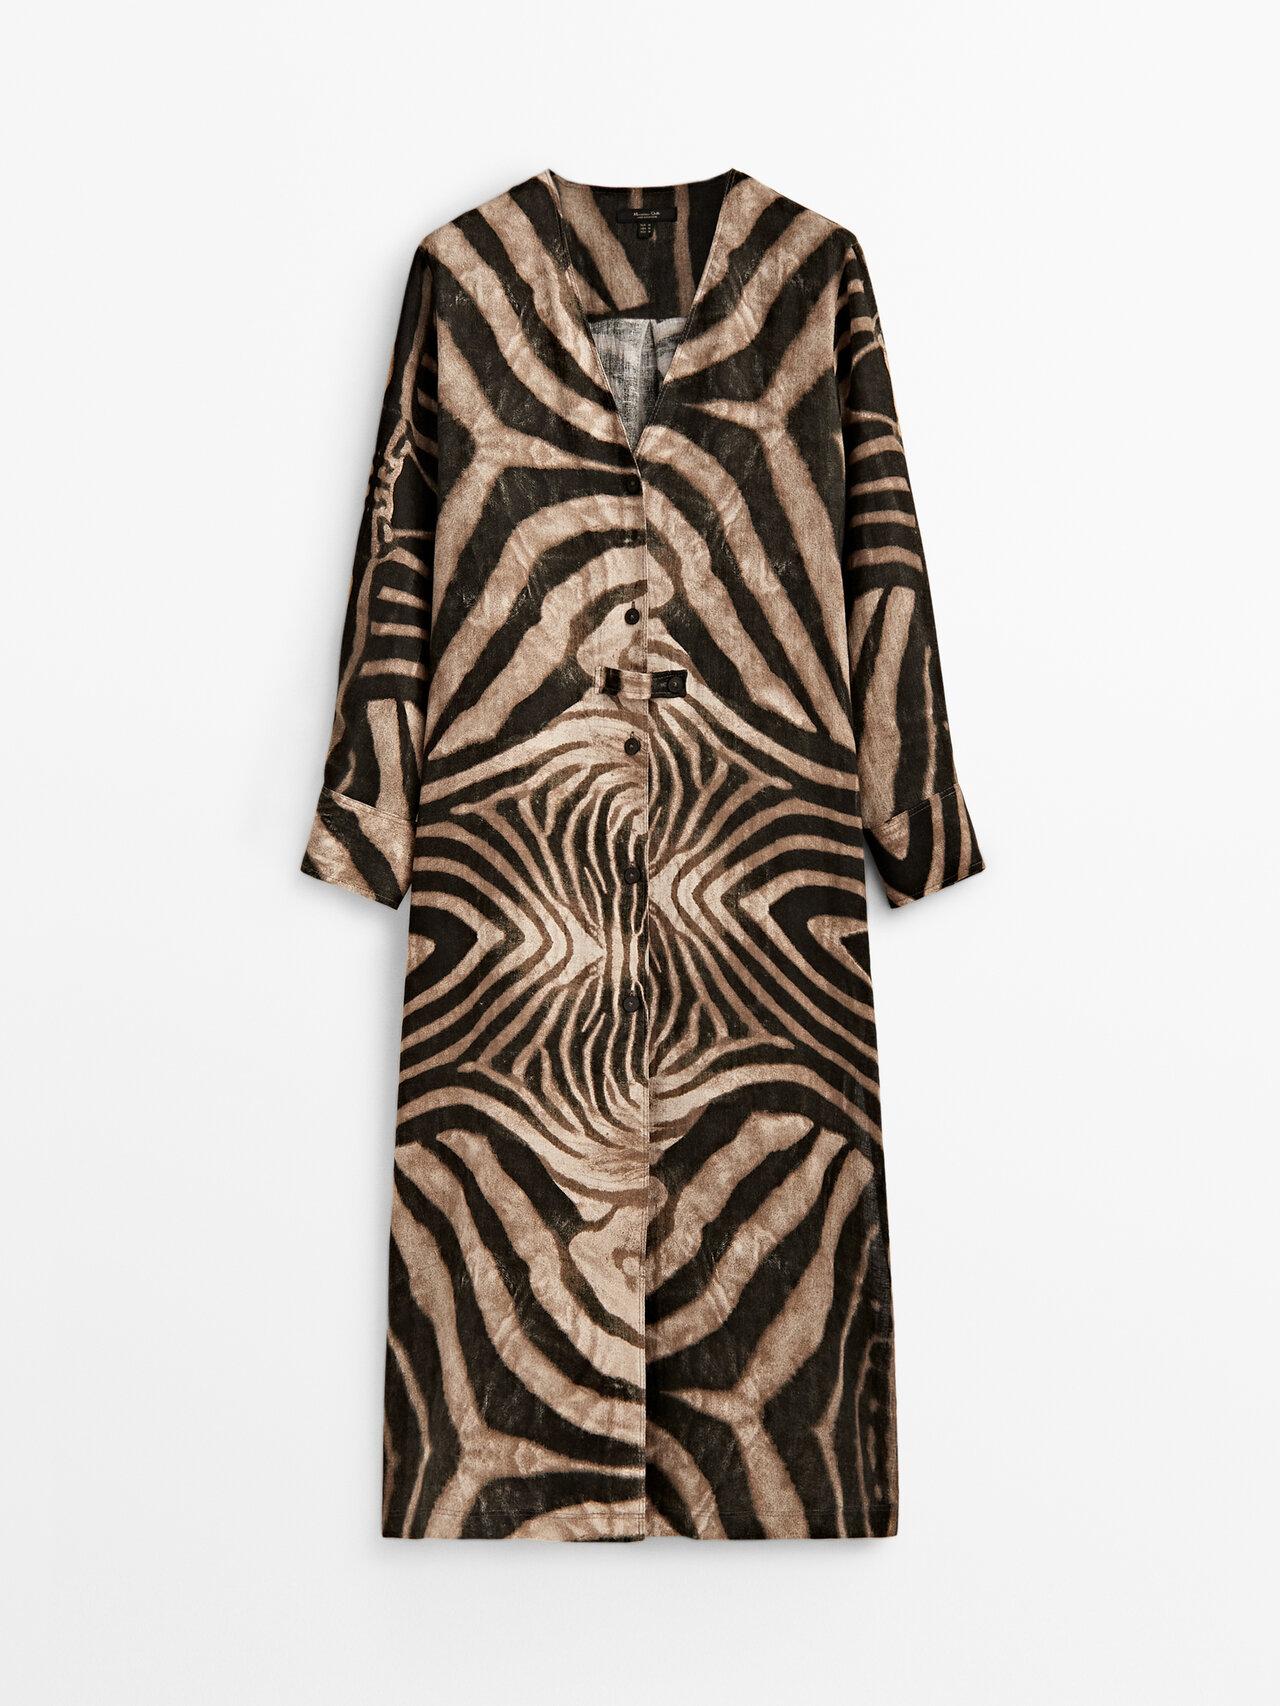 MASSIMO DUTTI 100% Linen Zebra Print Dress in Brown | Lyst